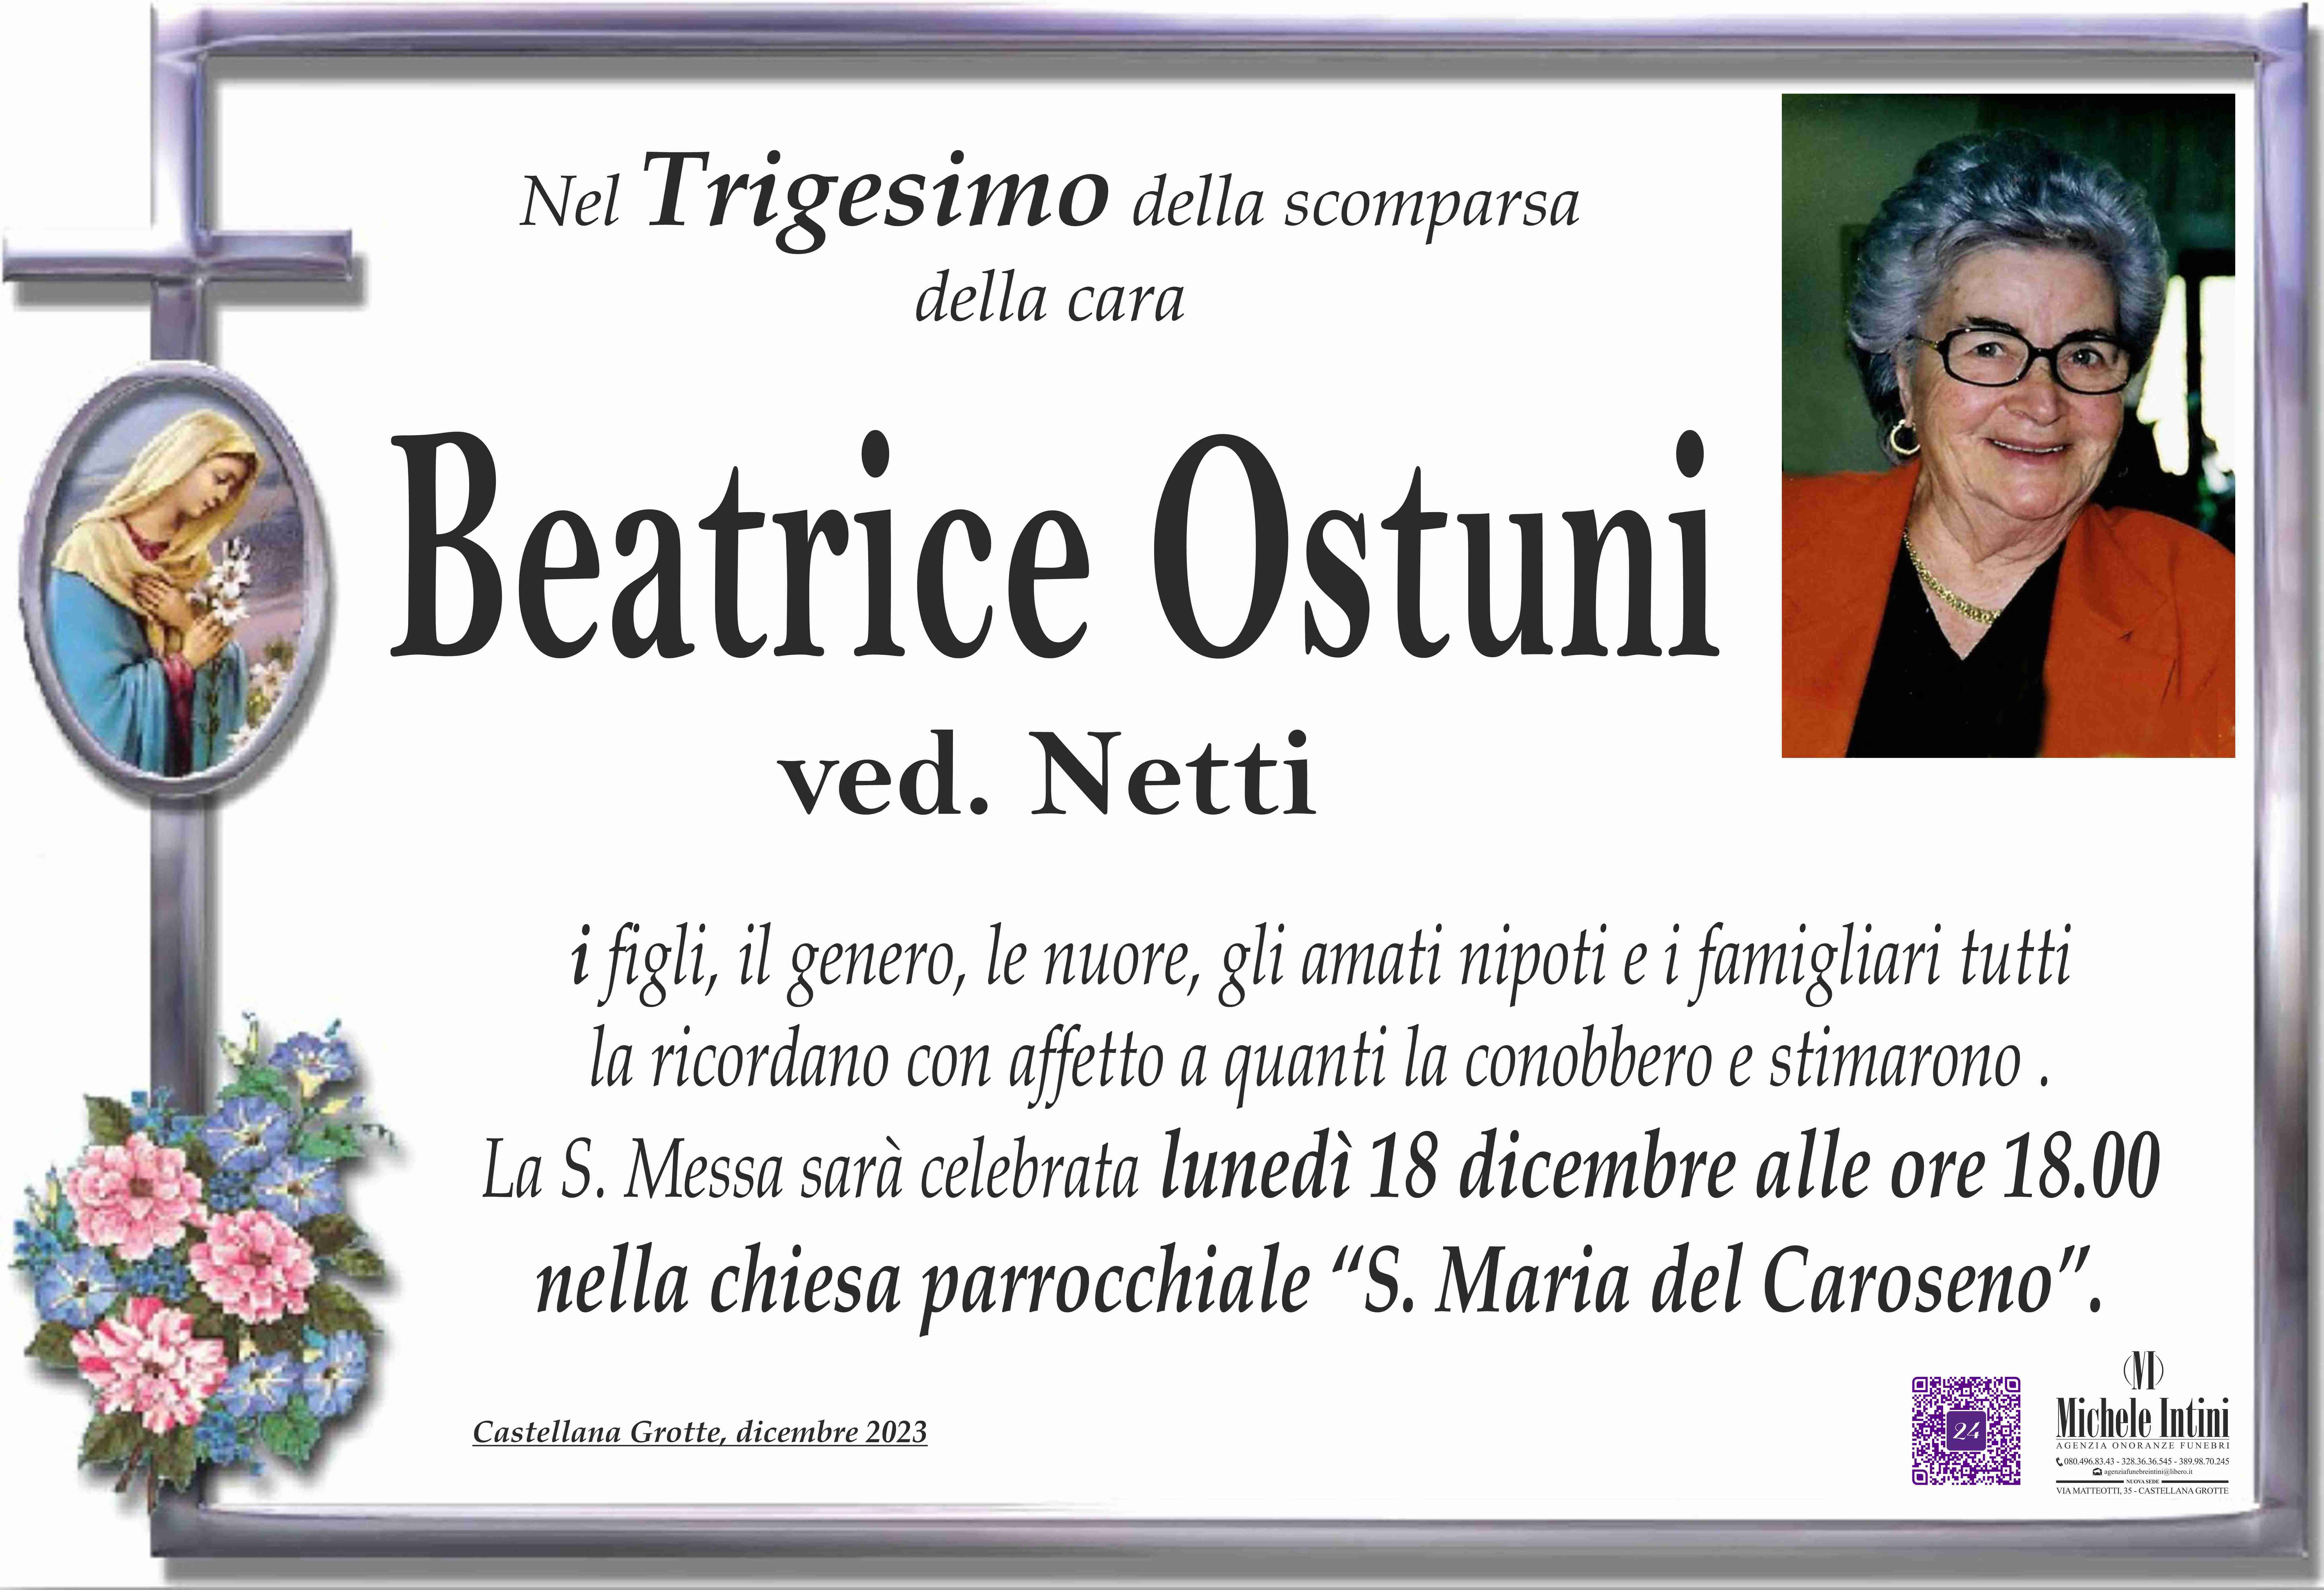 Beatrice Ostuni